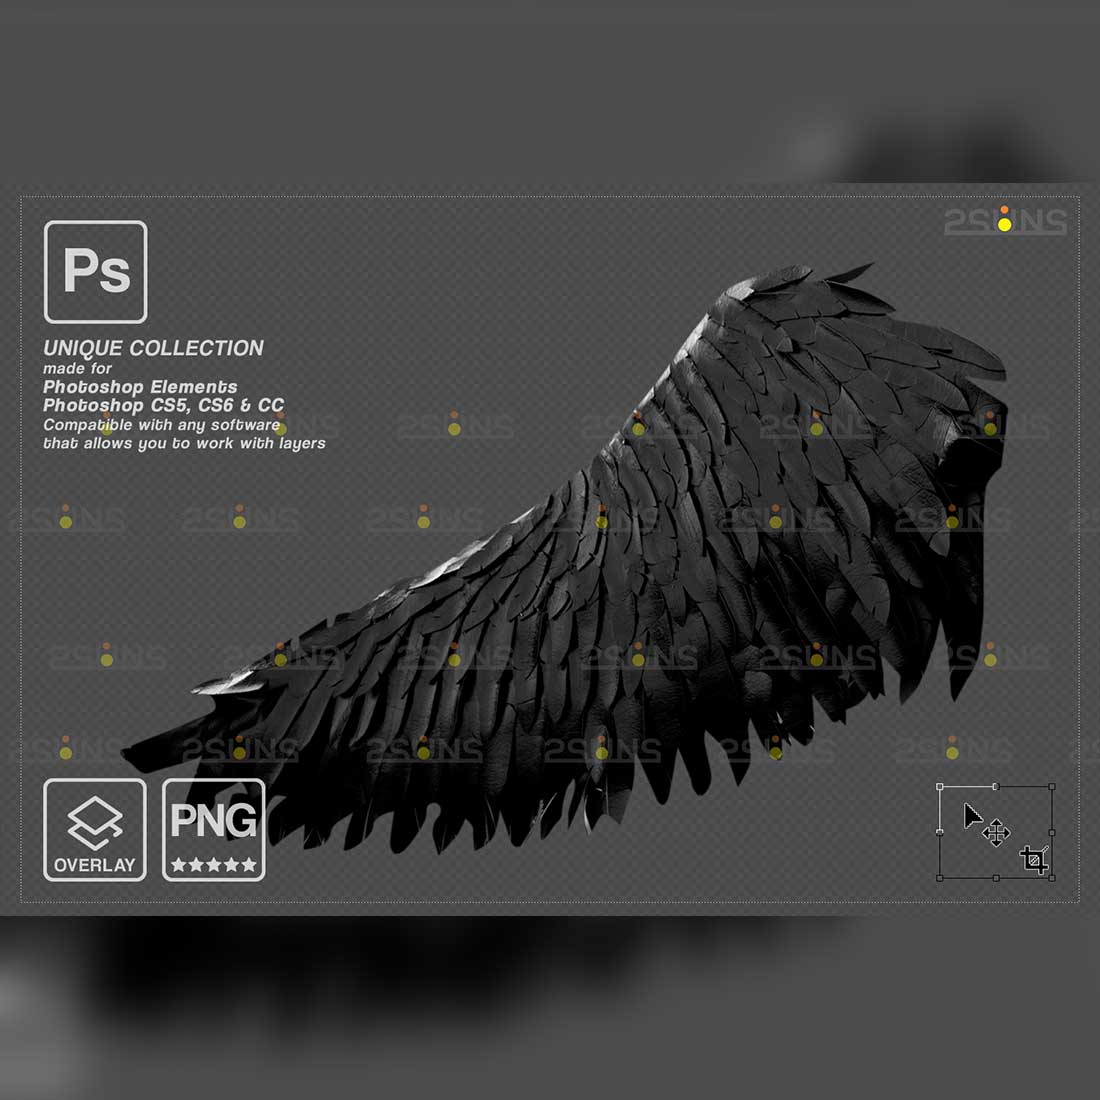 Realistic White Black Gold Angel Wings, Photoshop Overlays - MasterBundles